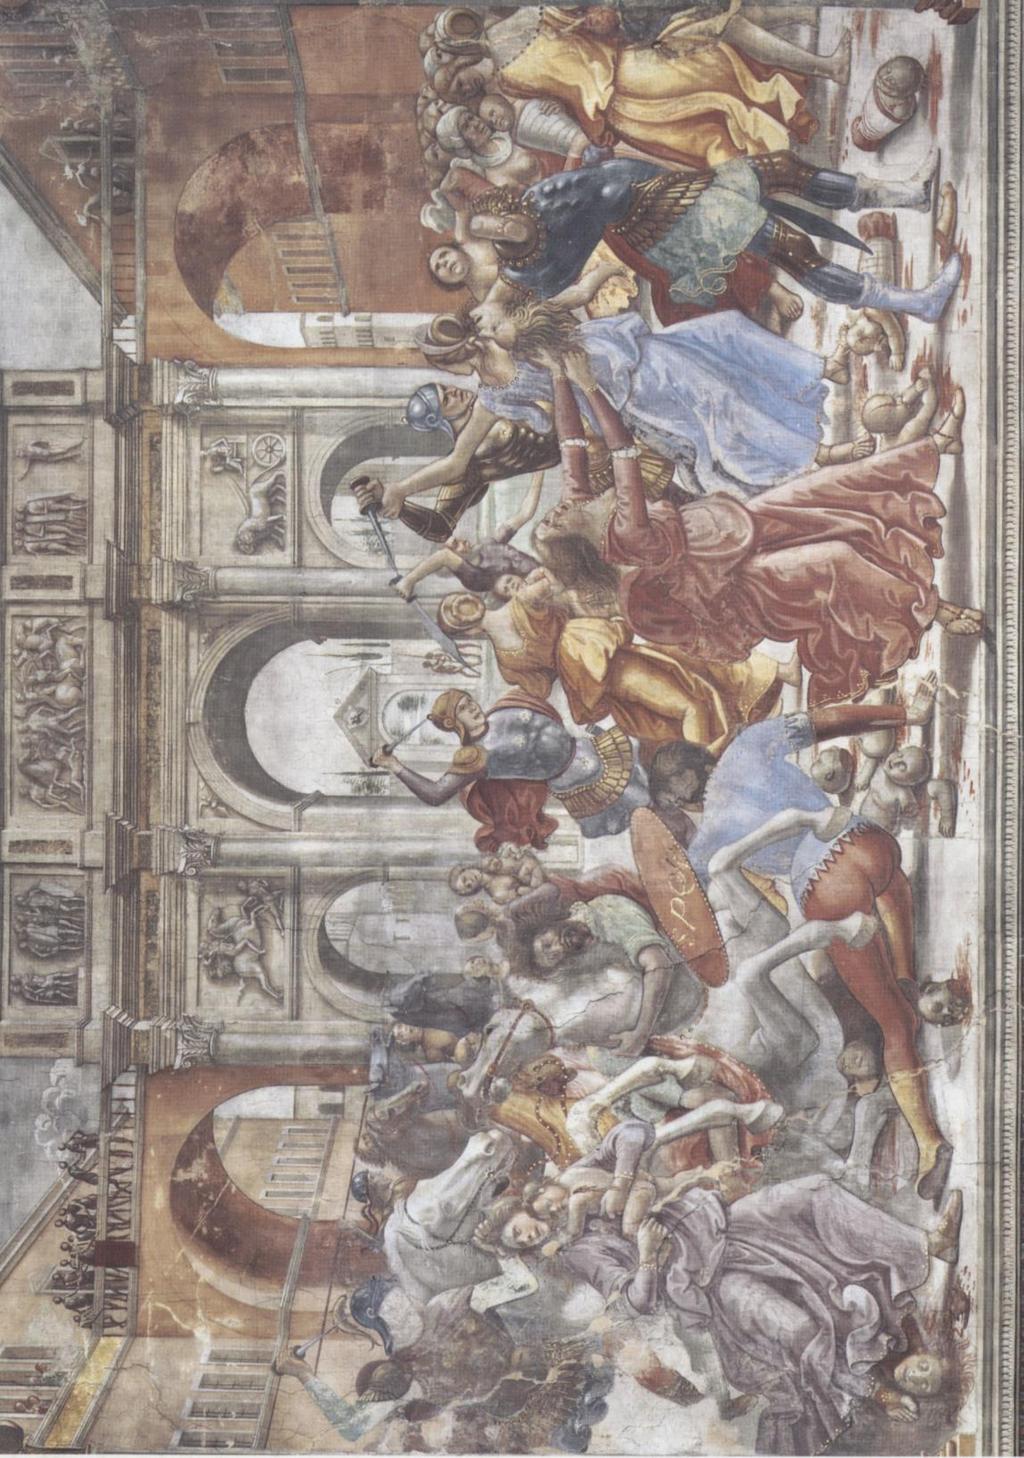 Plate 29: Domenico Bigordi called Ghirlandaio, and workshop, Slaughter of the Innocents,